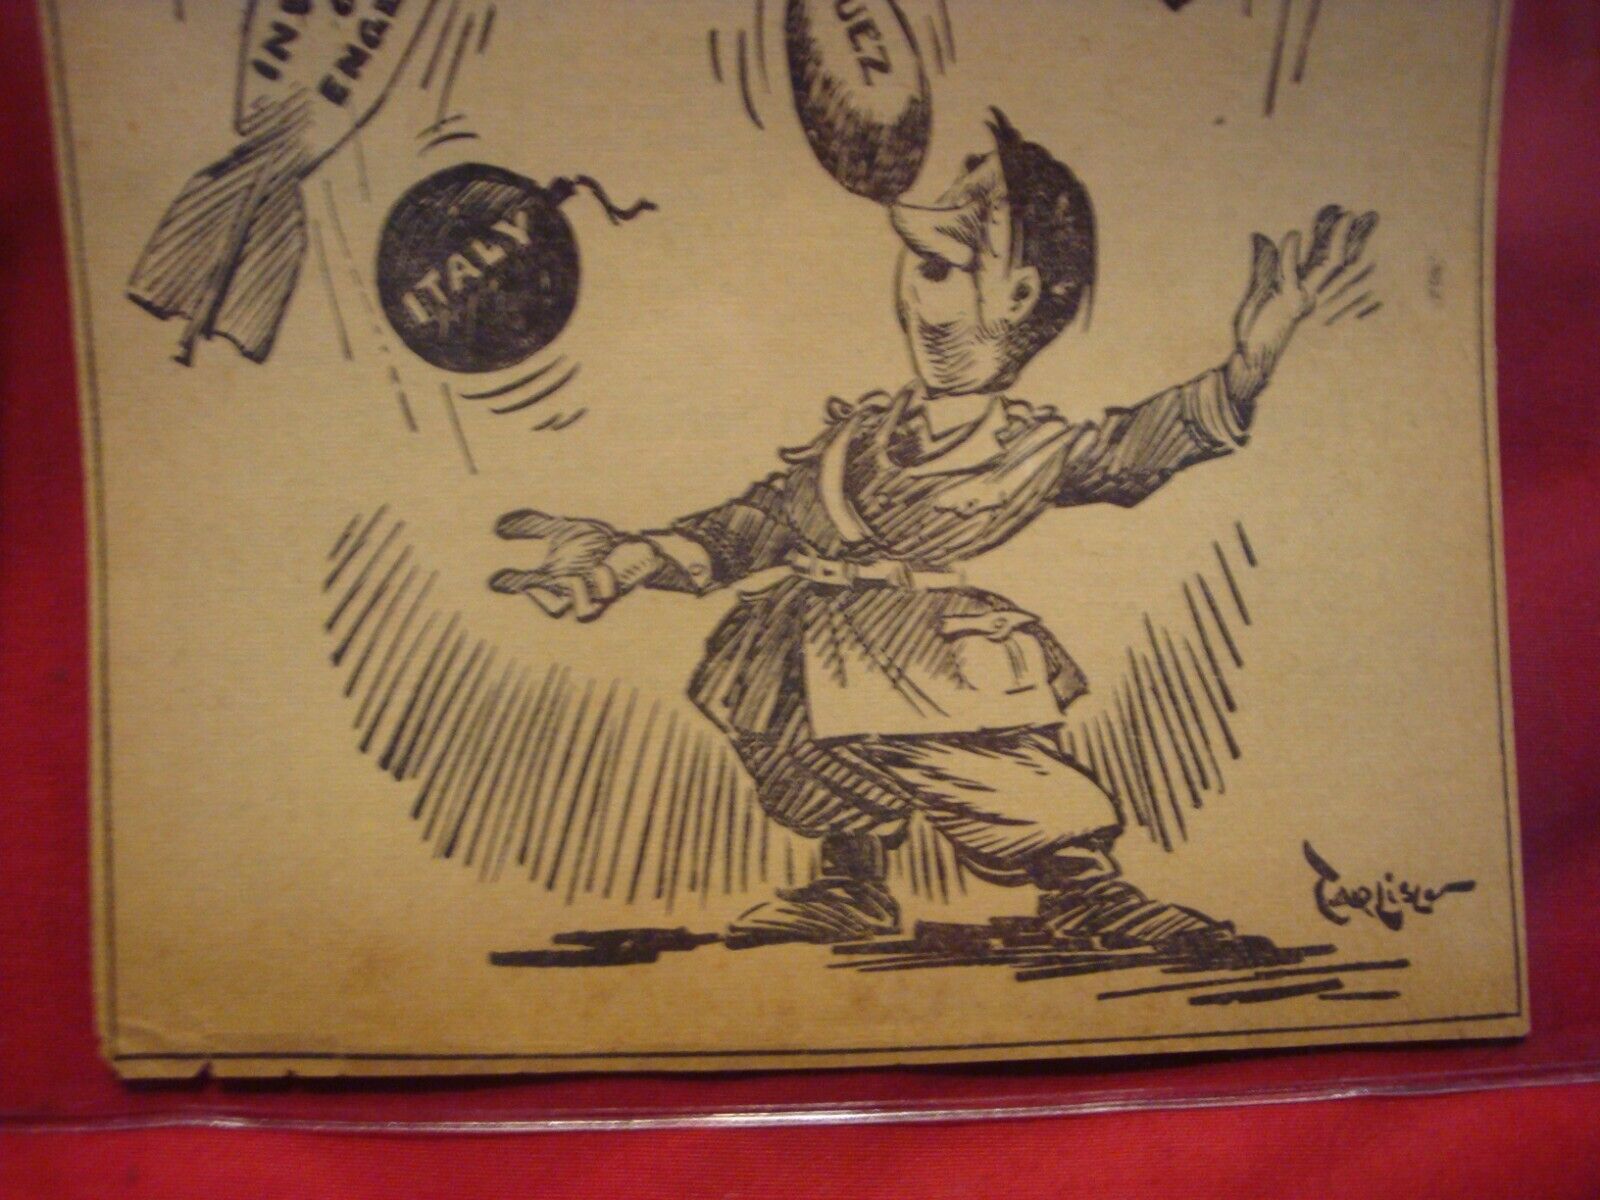 Comical WW2 Satirical Cartoon dated Feb 19 1941 cut out of US Newspaper